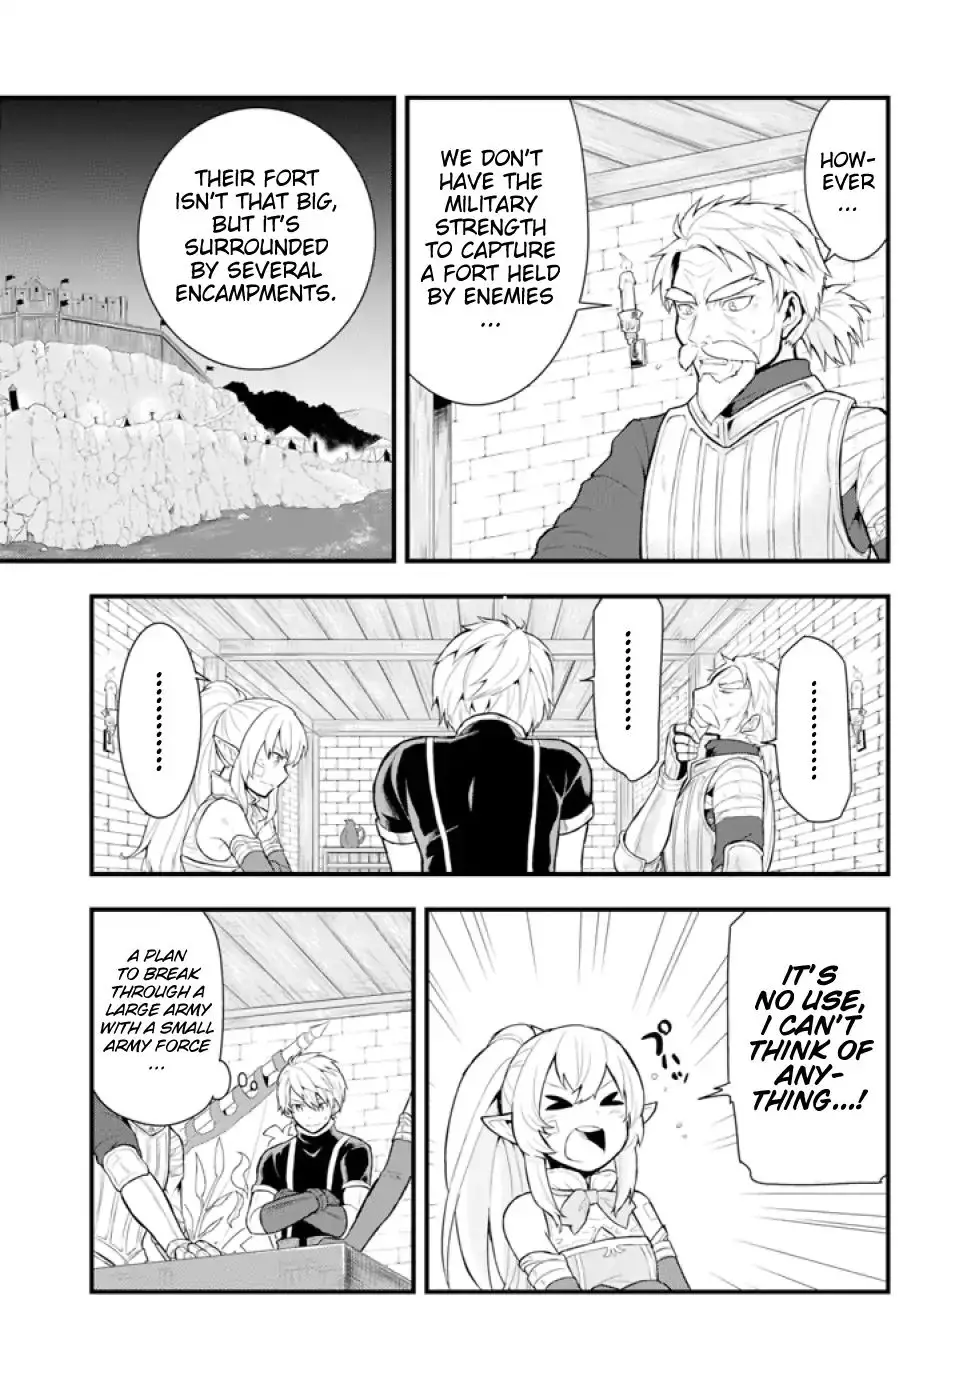 Mysterious Job Called Oda Nobunaga - 3 page 8